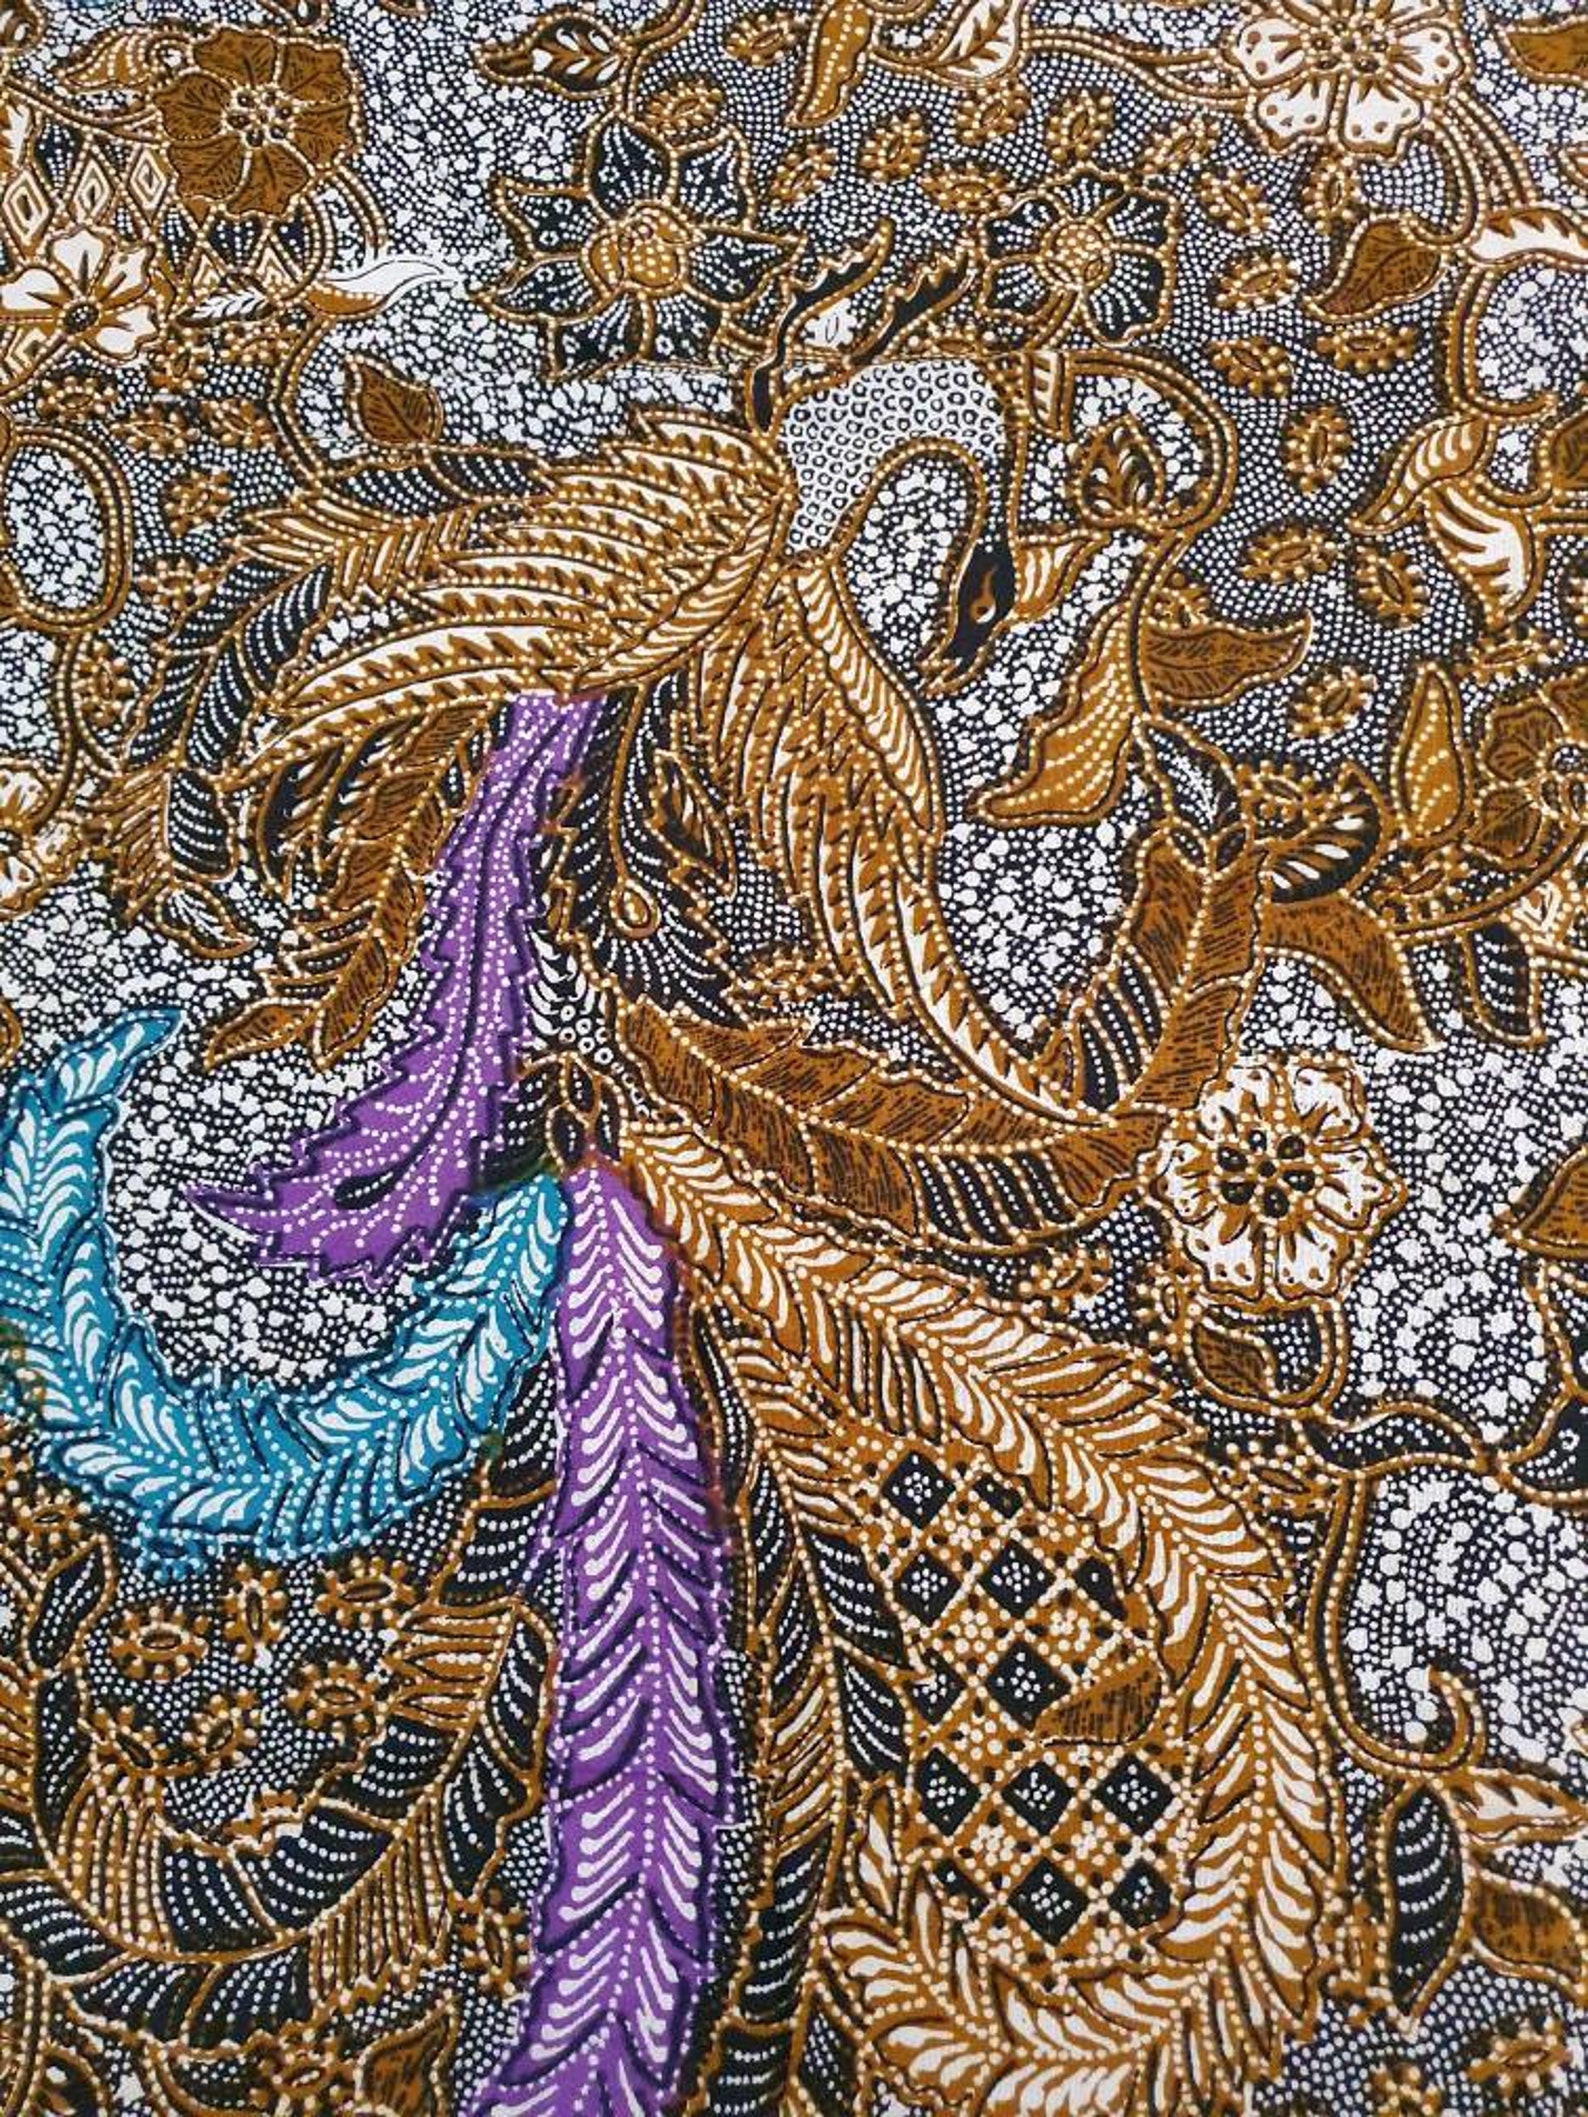  Tissu  batik  indon sien  traditionnel sarong pareo 100 